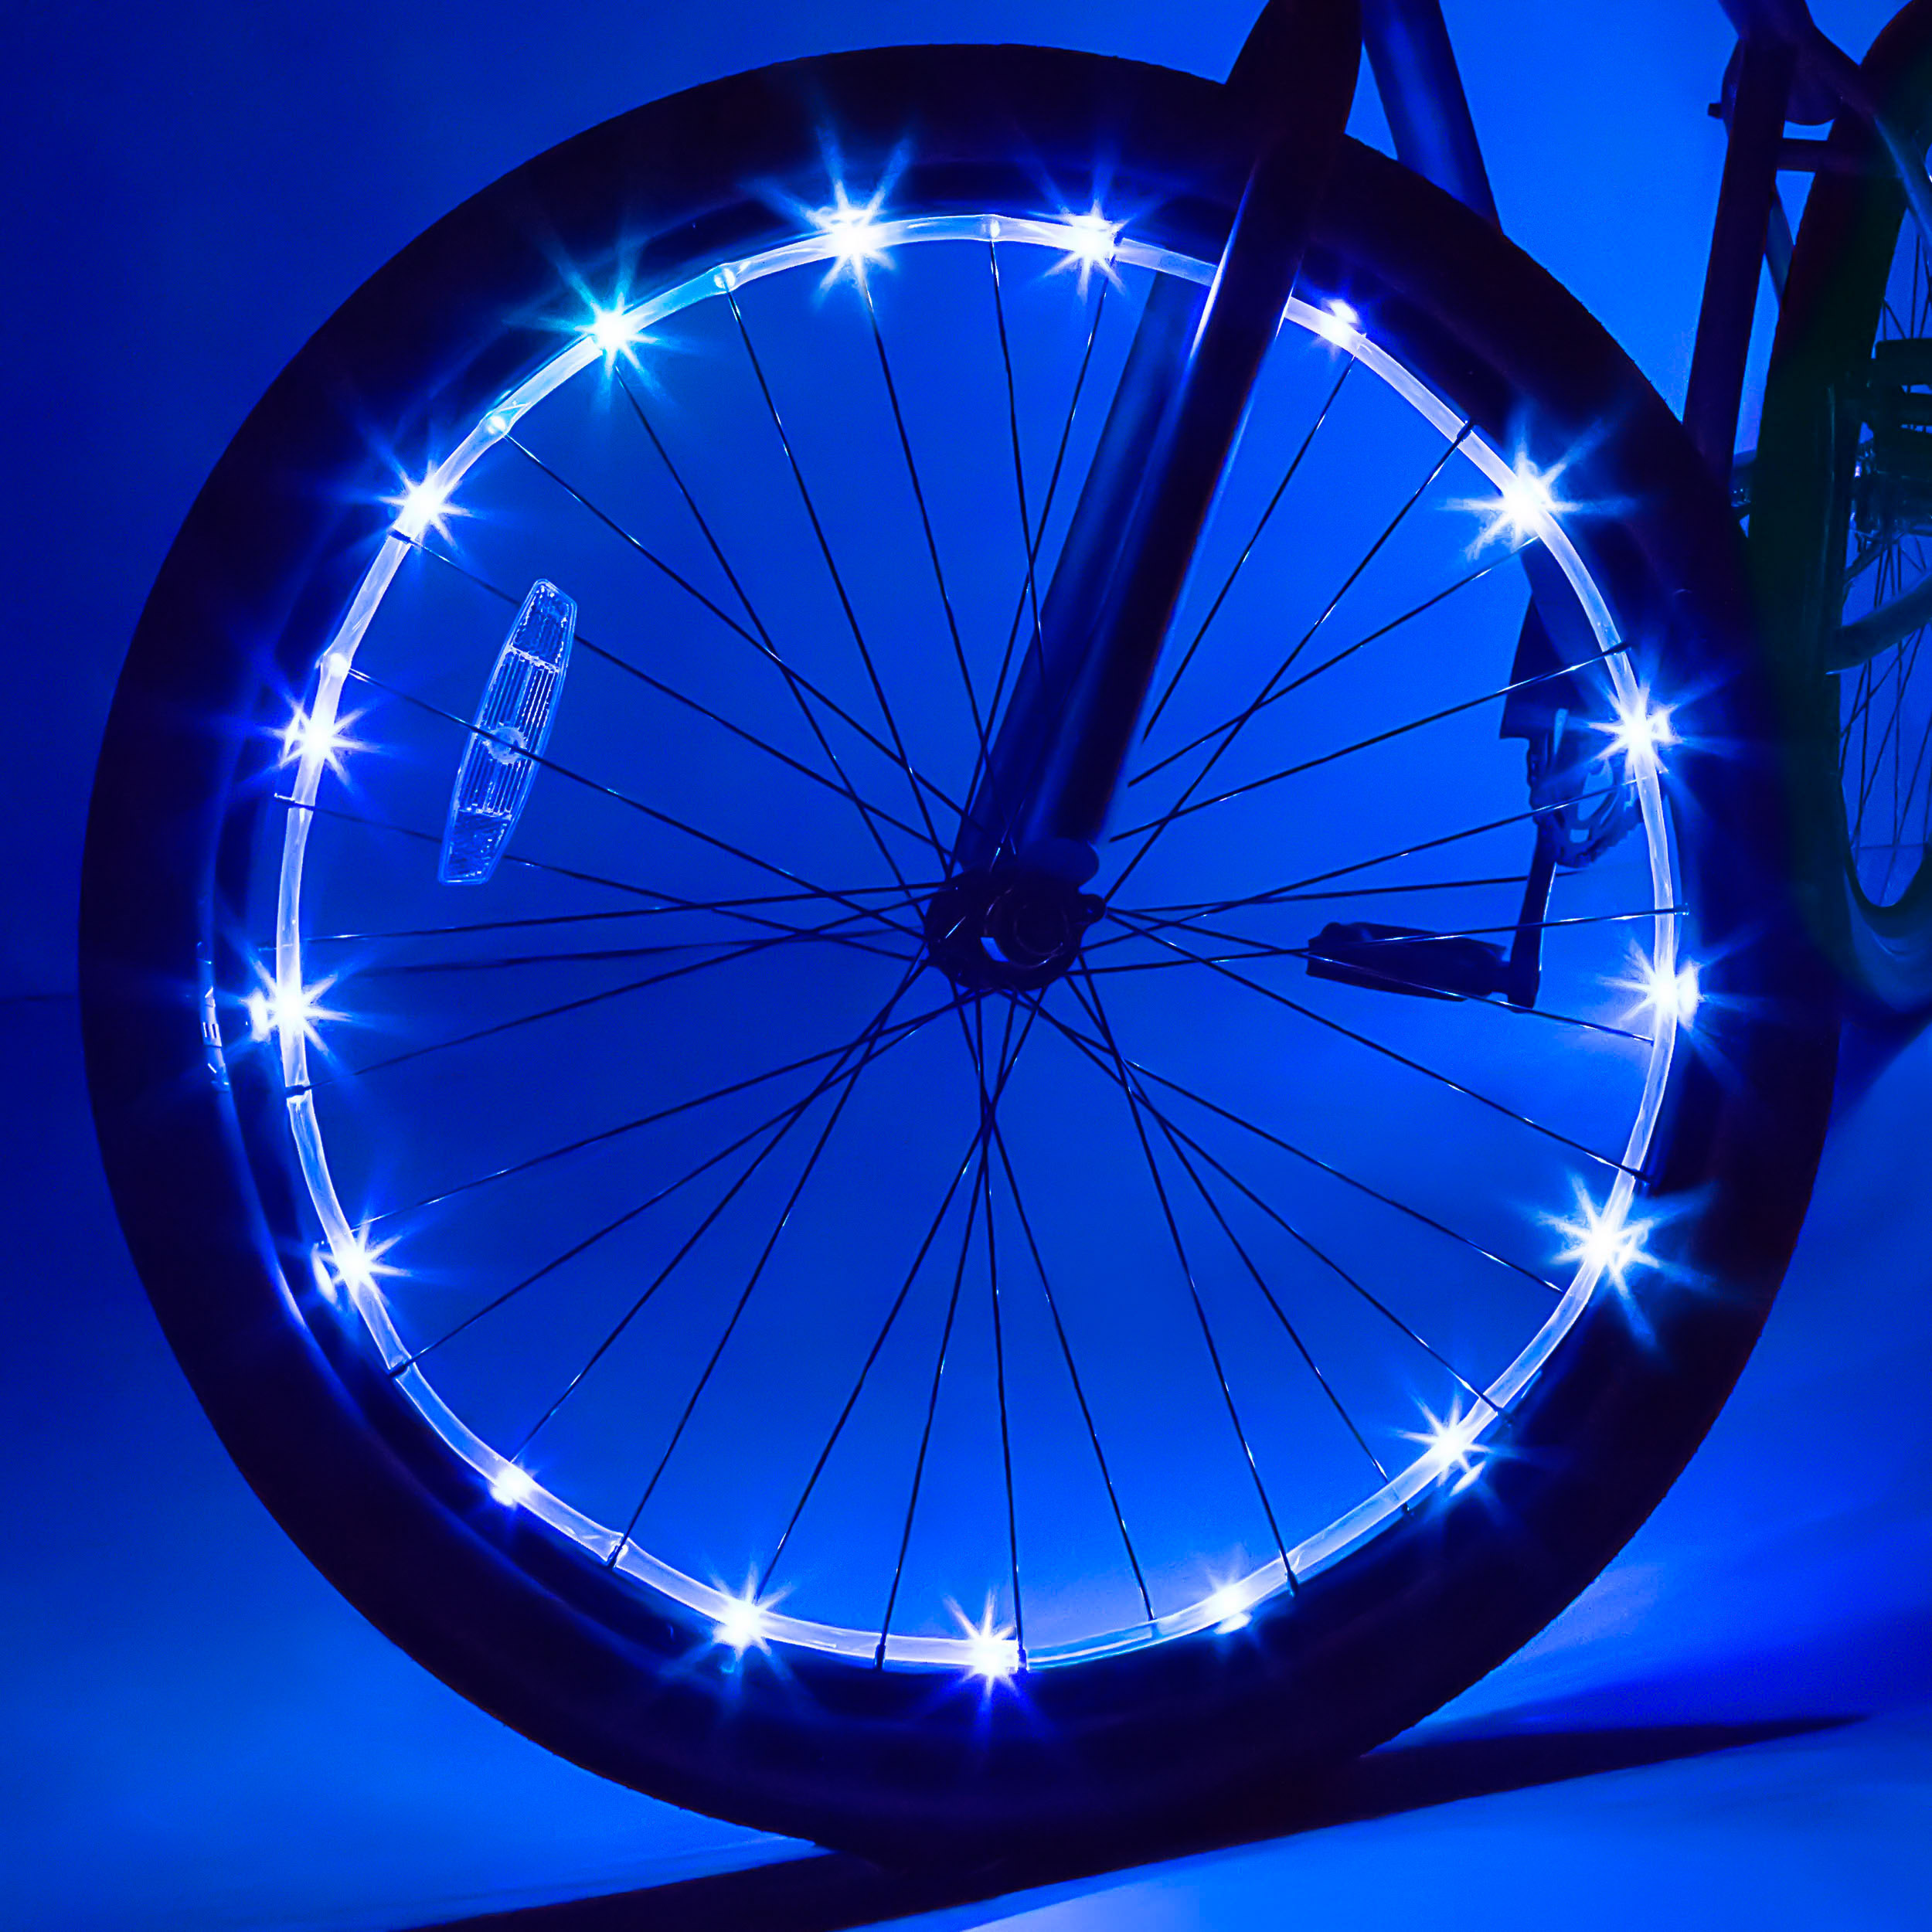 Color-Changing LED Wheel Light for Bikes